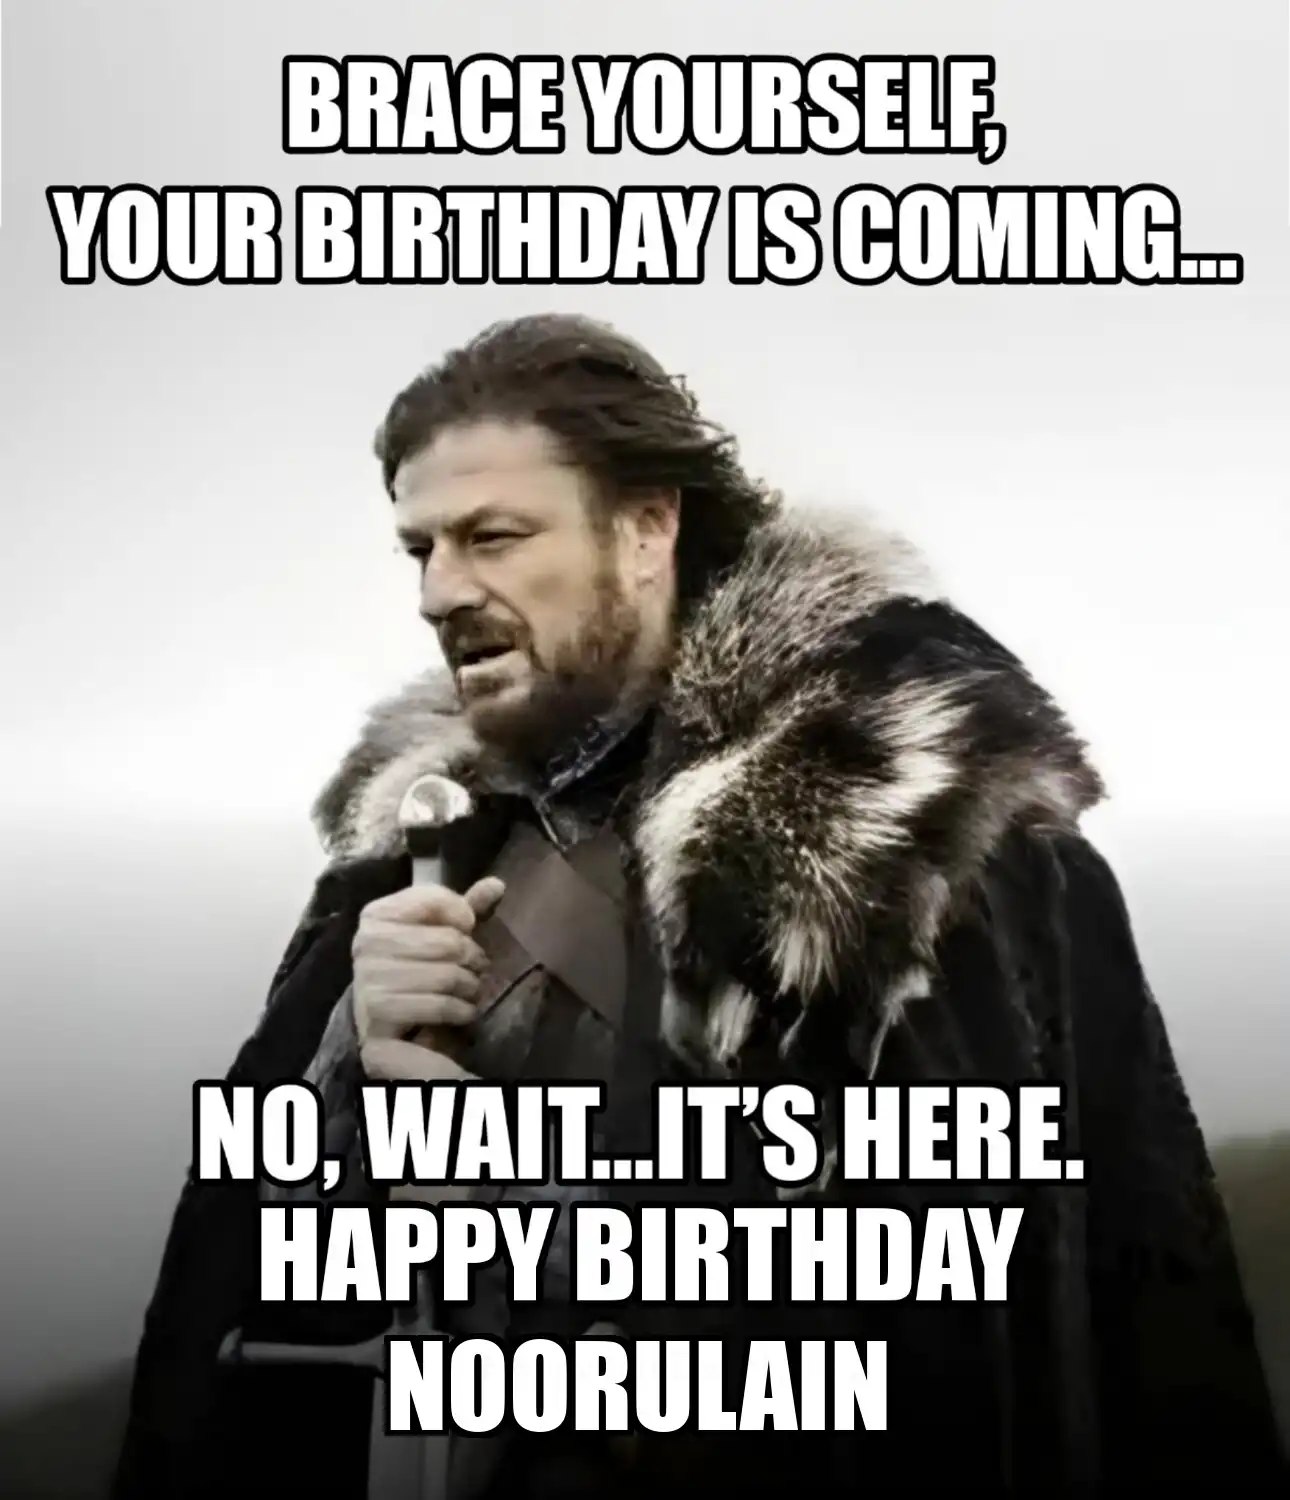 Happy Birthday Noorulain Brace Yourself Your Birthday Is Coming Meme